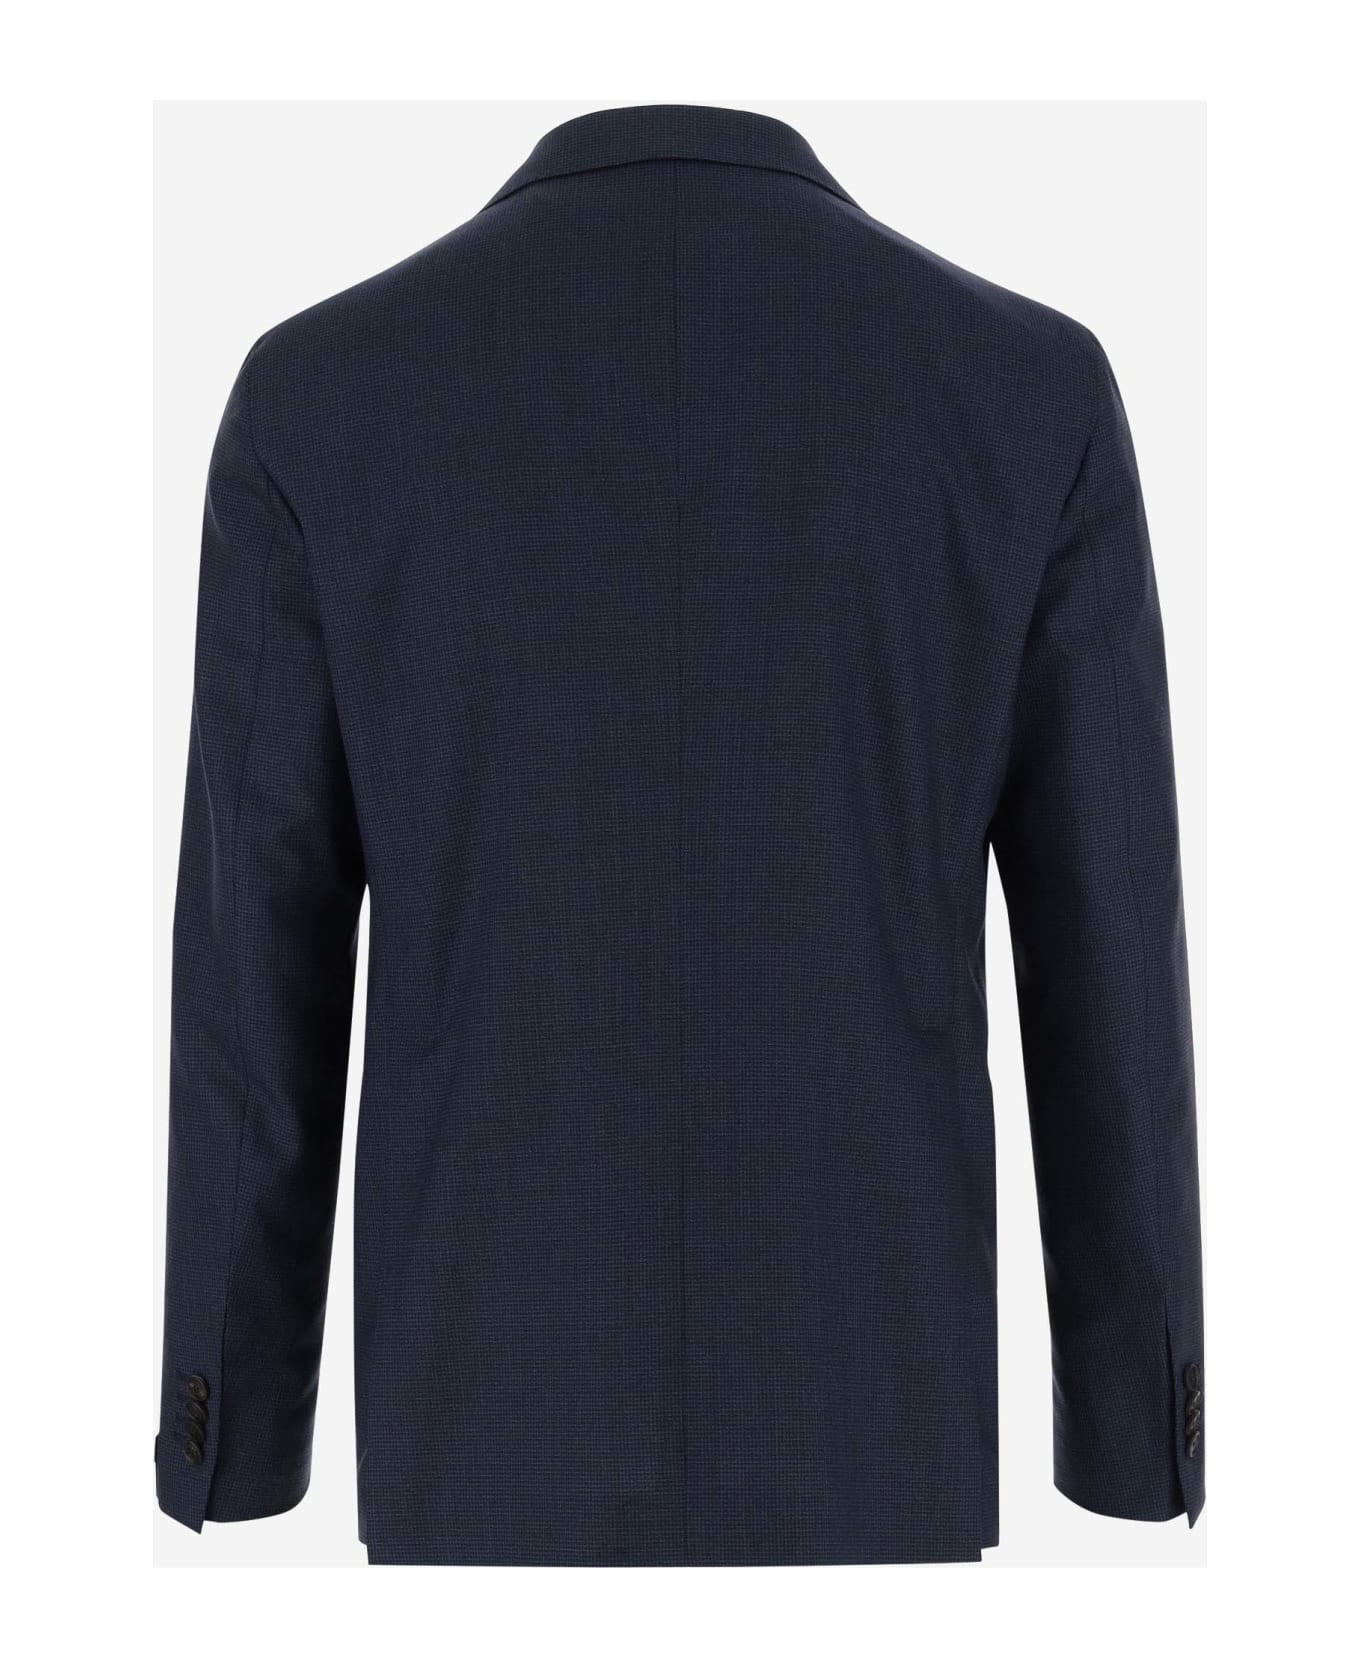 Tagliatore Single-breasted Wool Jacket - Blue